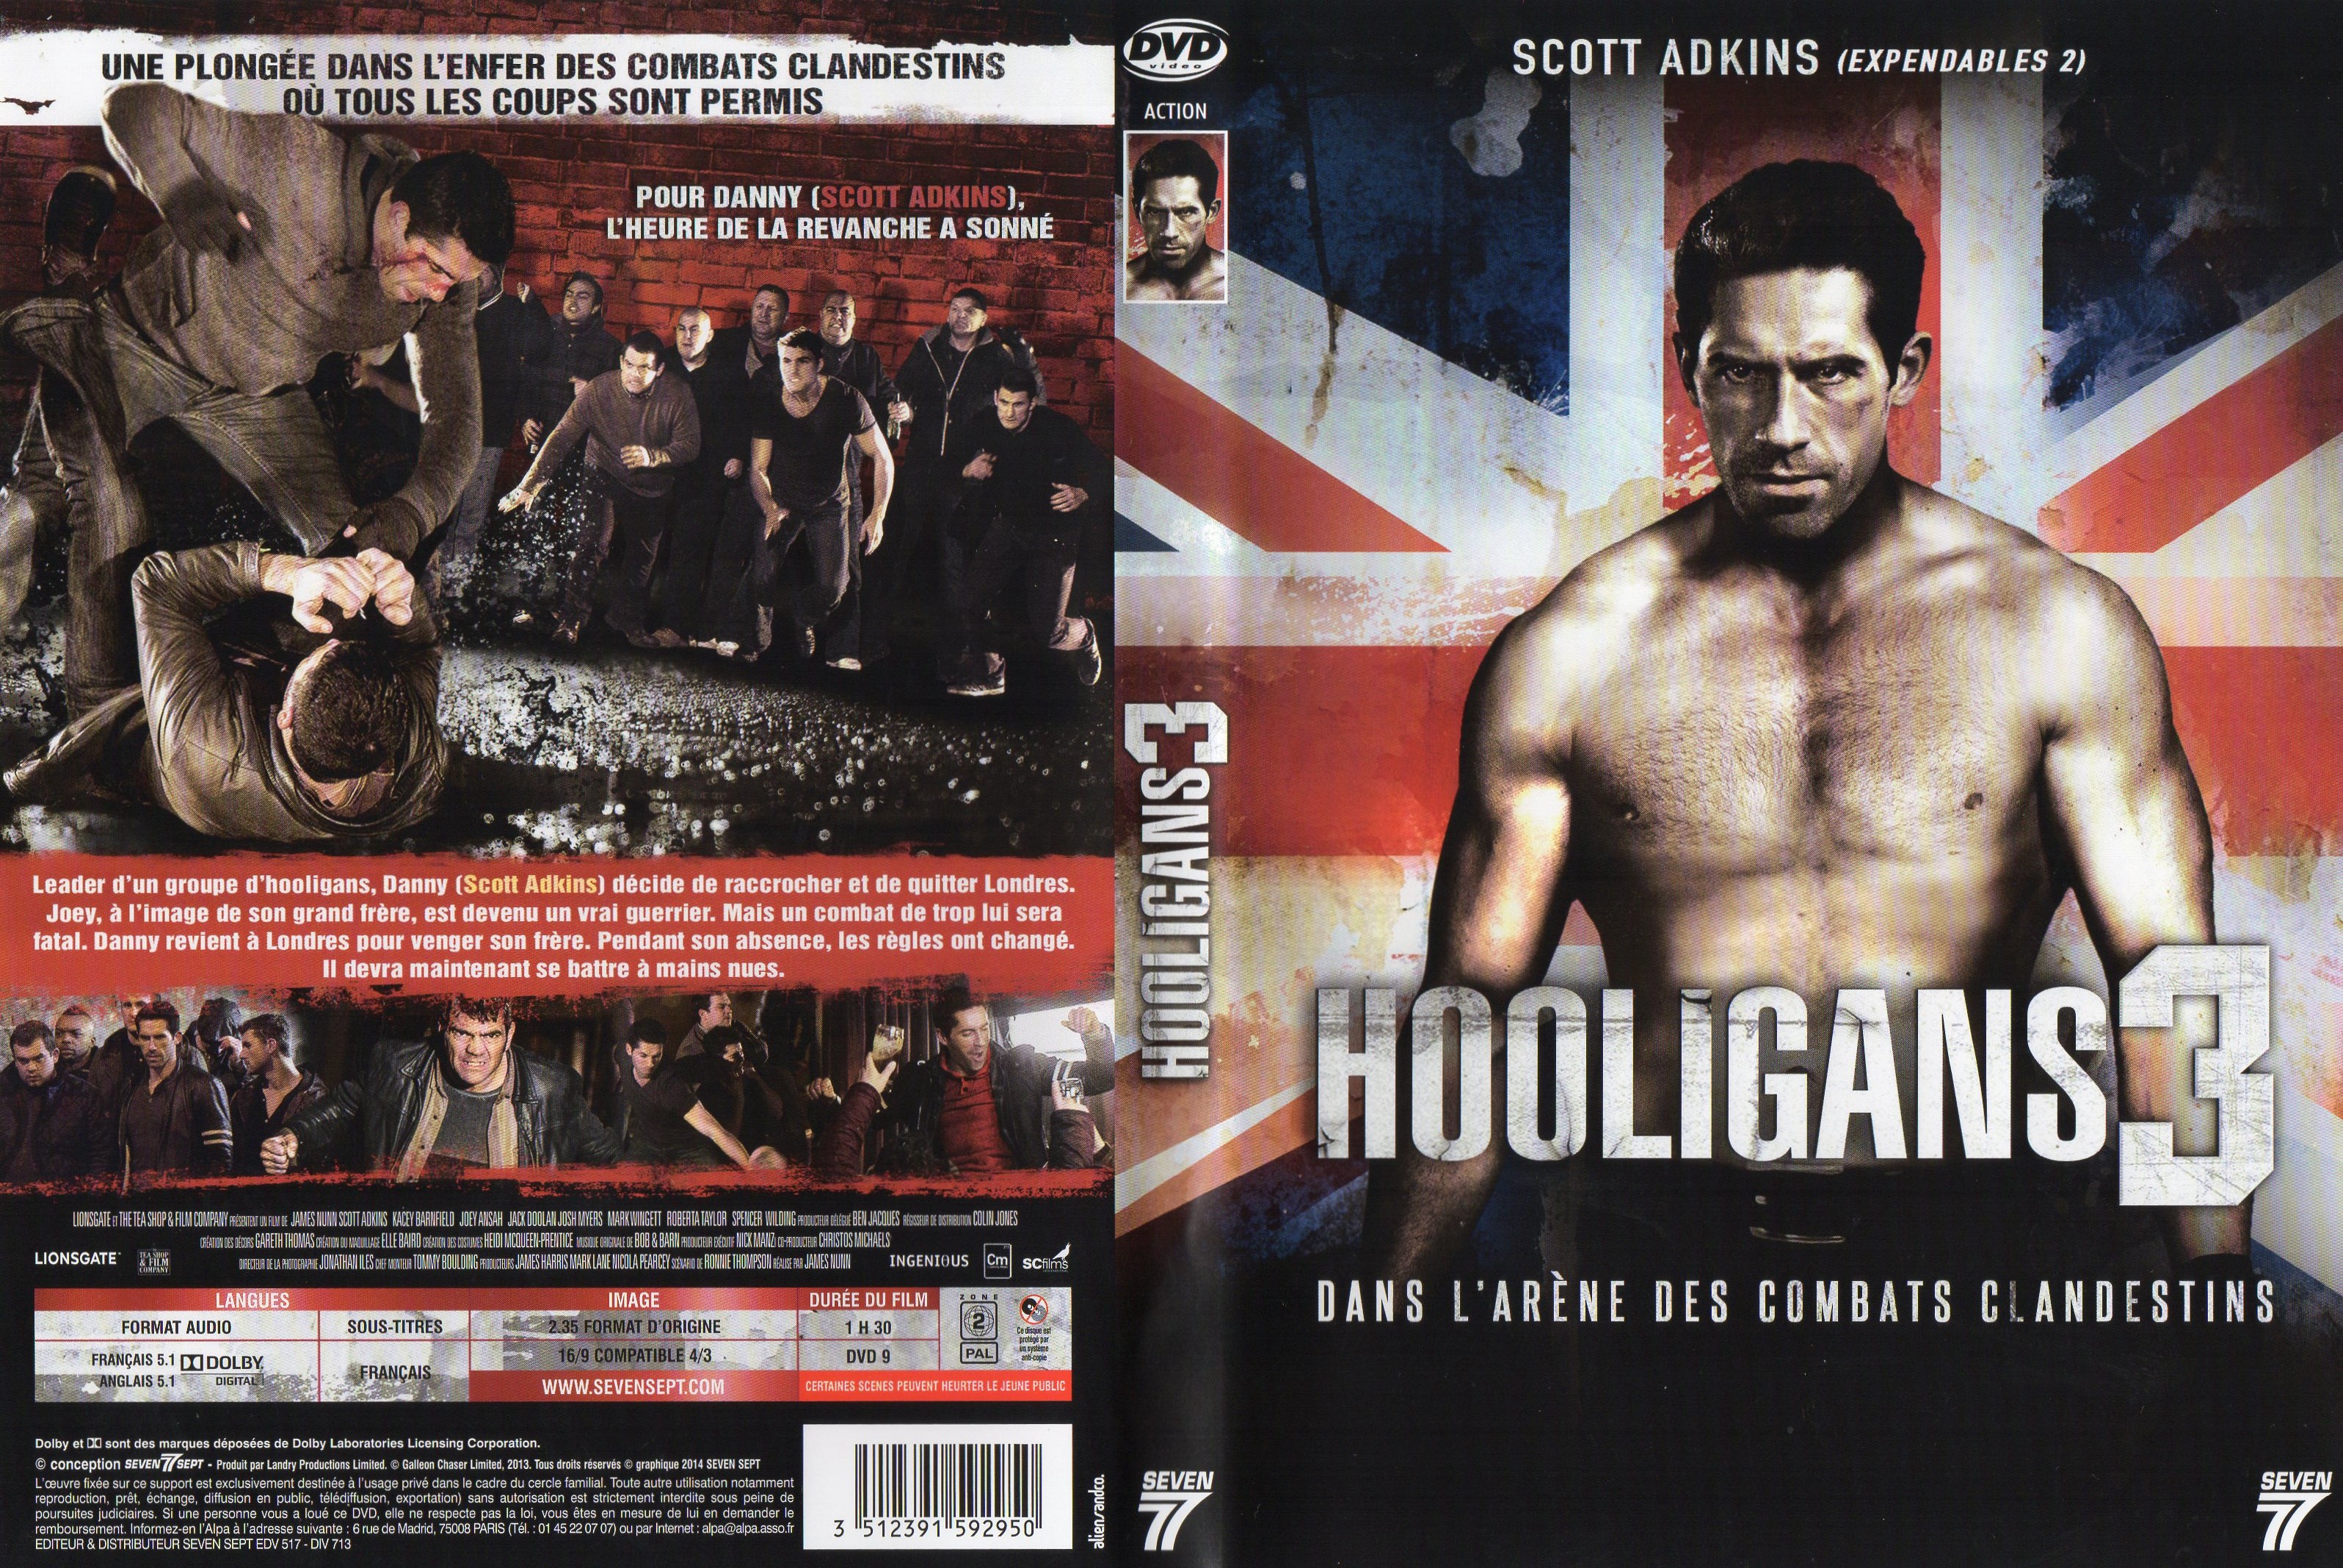 Jaquette DVD Hooligans 3